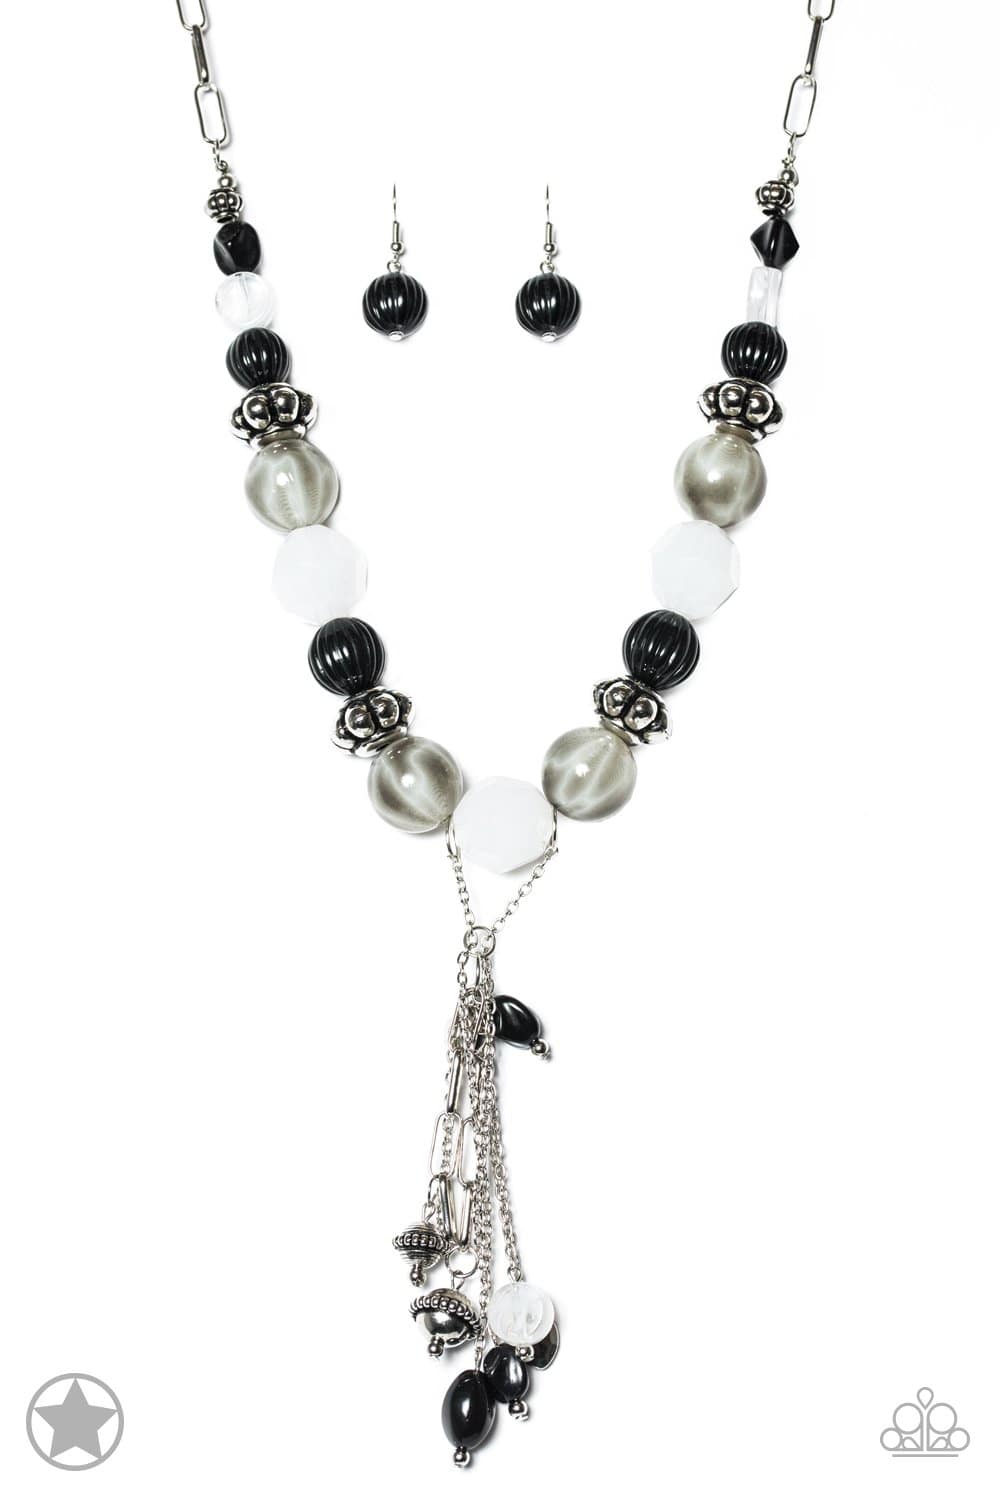 Break A Leg! - Blockbuster Black & White Necklace - Paparazzi Accessories - GlaMarous Titi Jewels